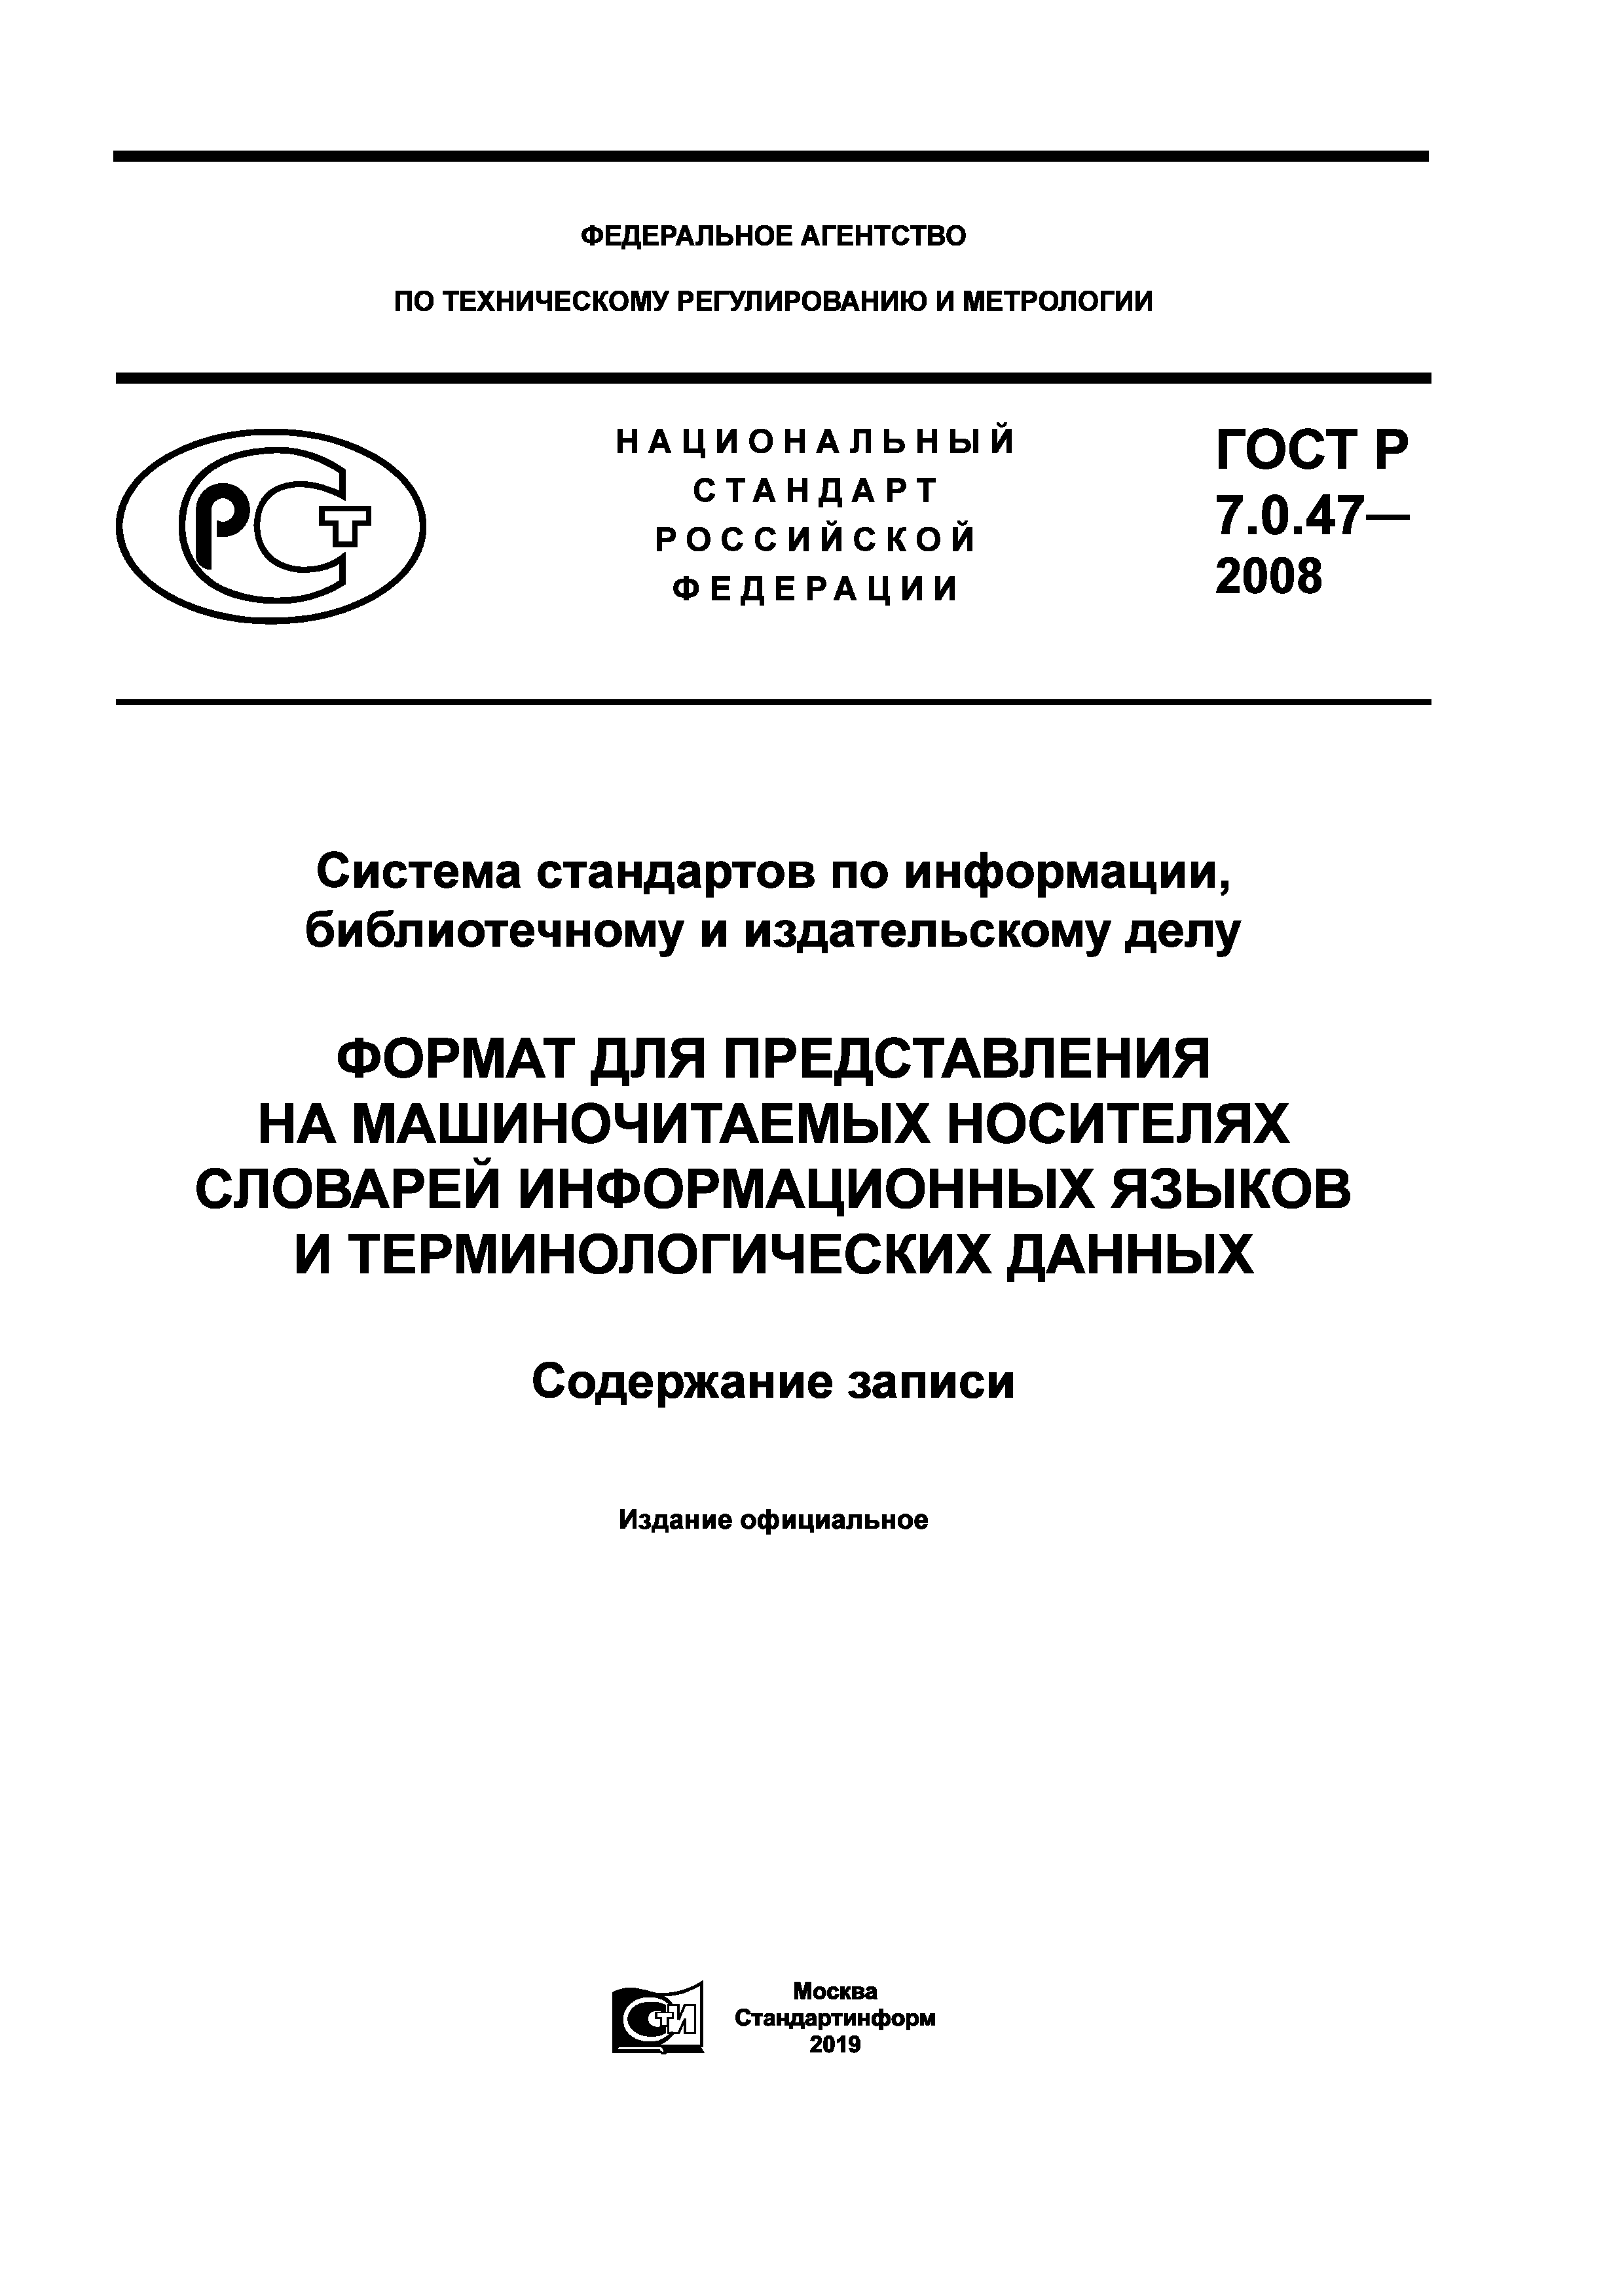 ГОСТ Р 7.0.47-2008